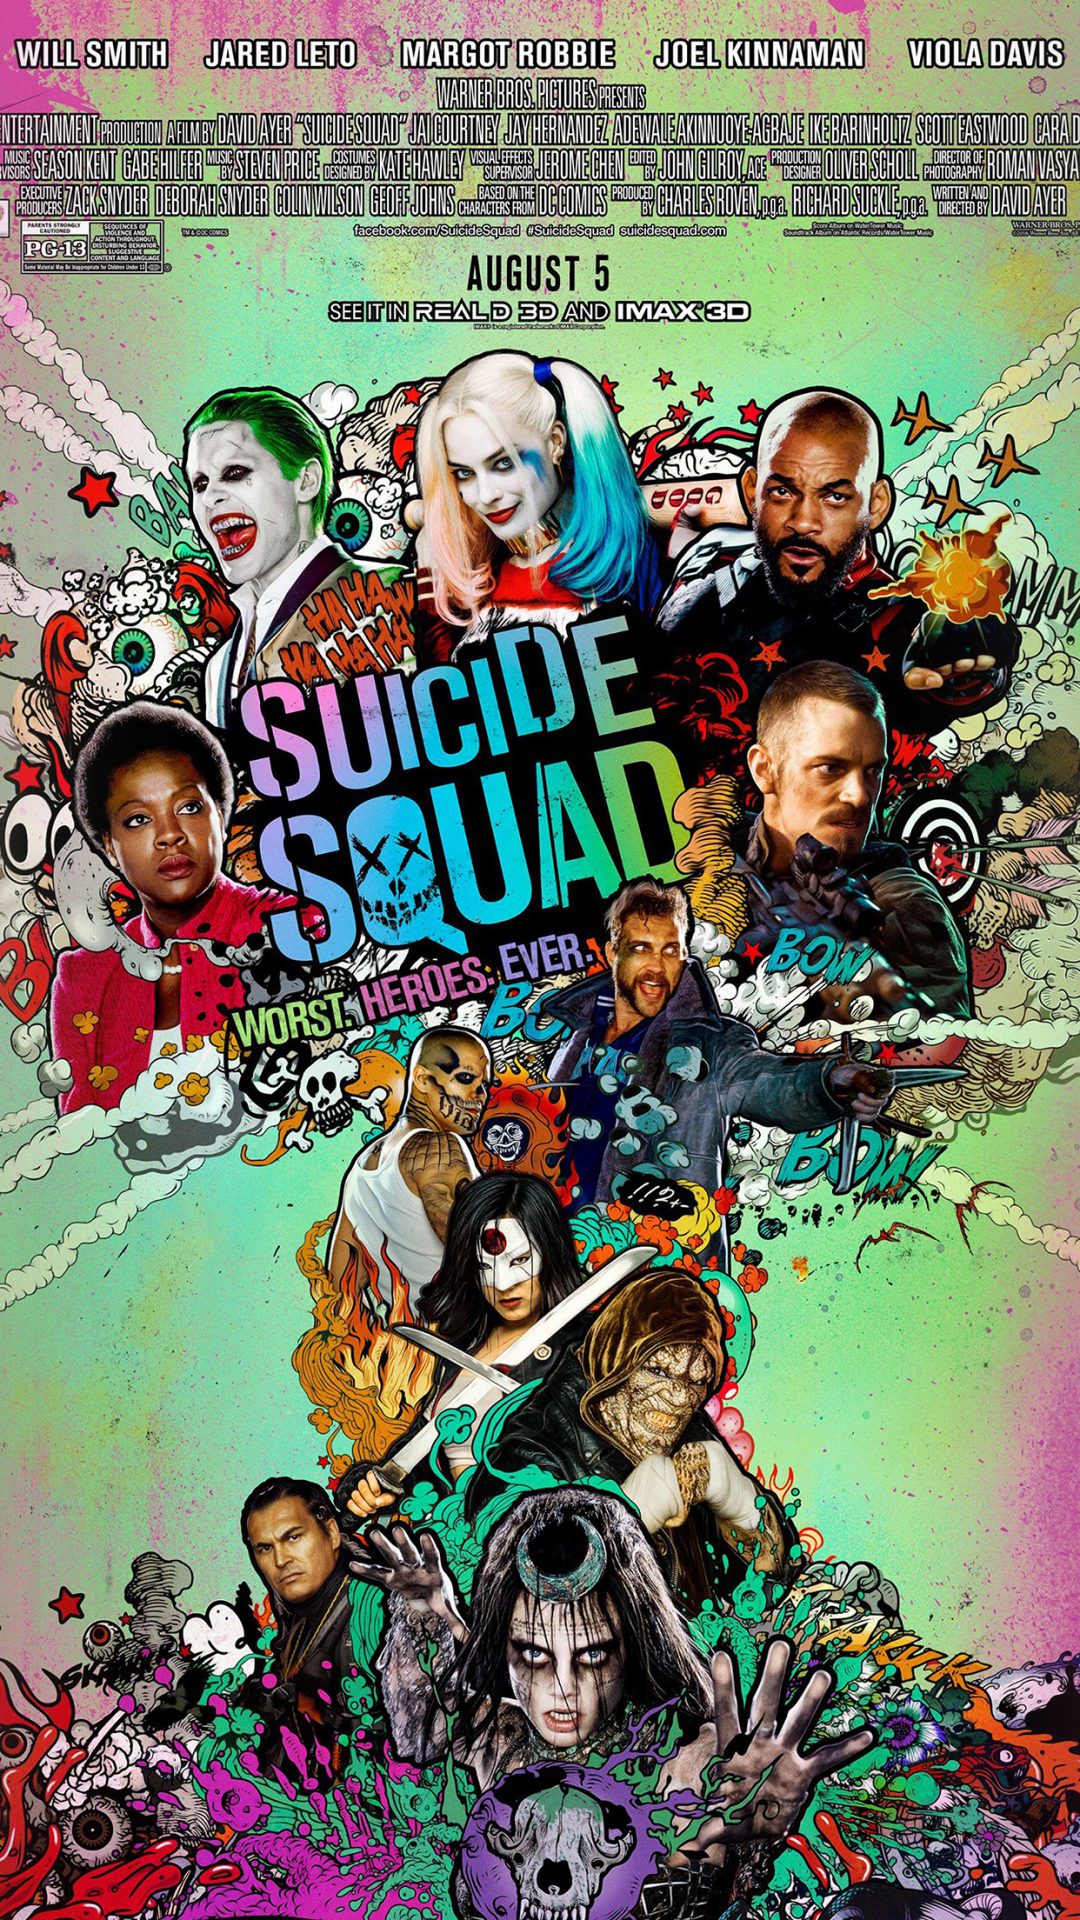 Suicide Squad Film Poster Art Illustration